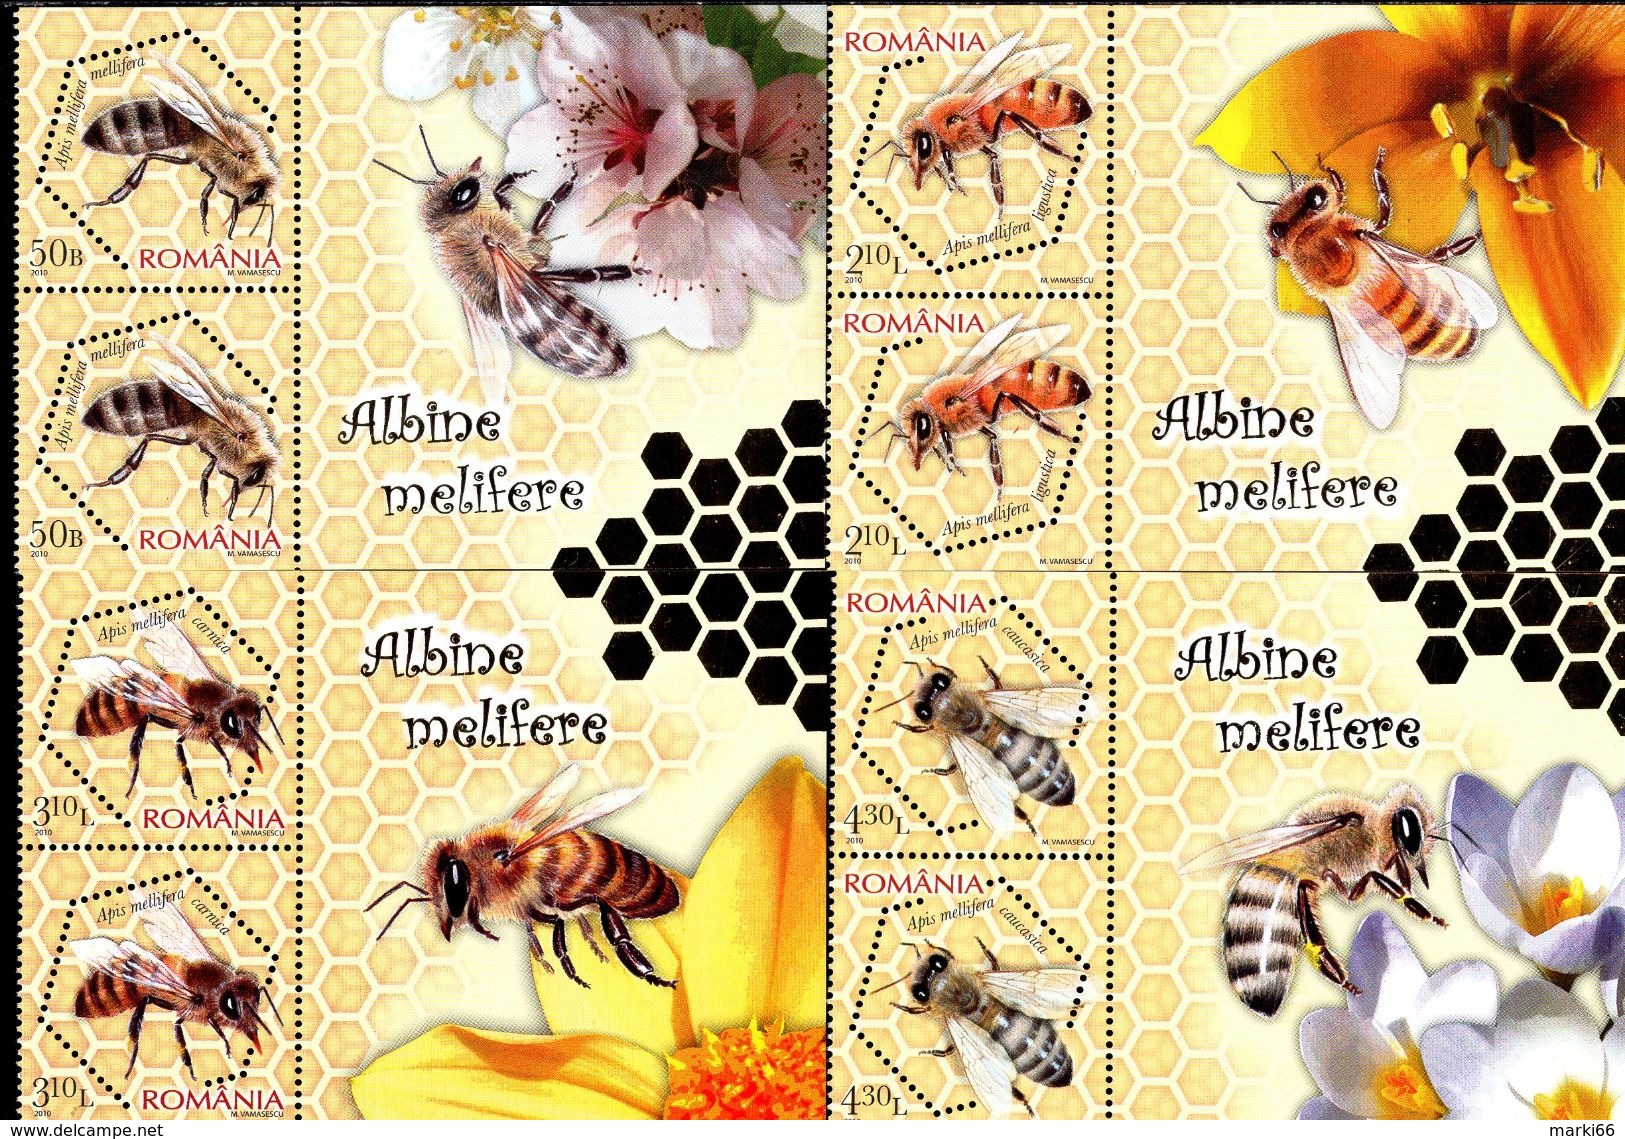 Romania - 2010 - Bees - Apiculture In Romania - Mint Stamp Pairs Set - Unused Stamps